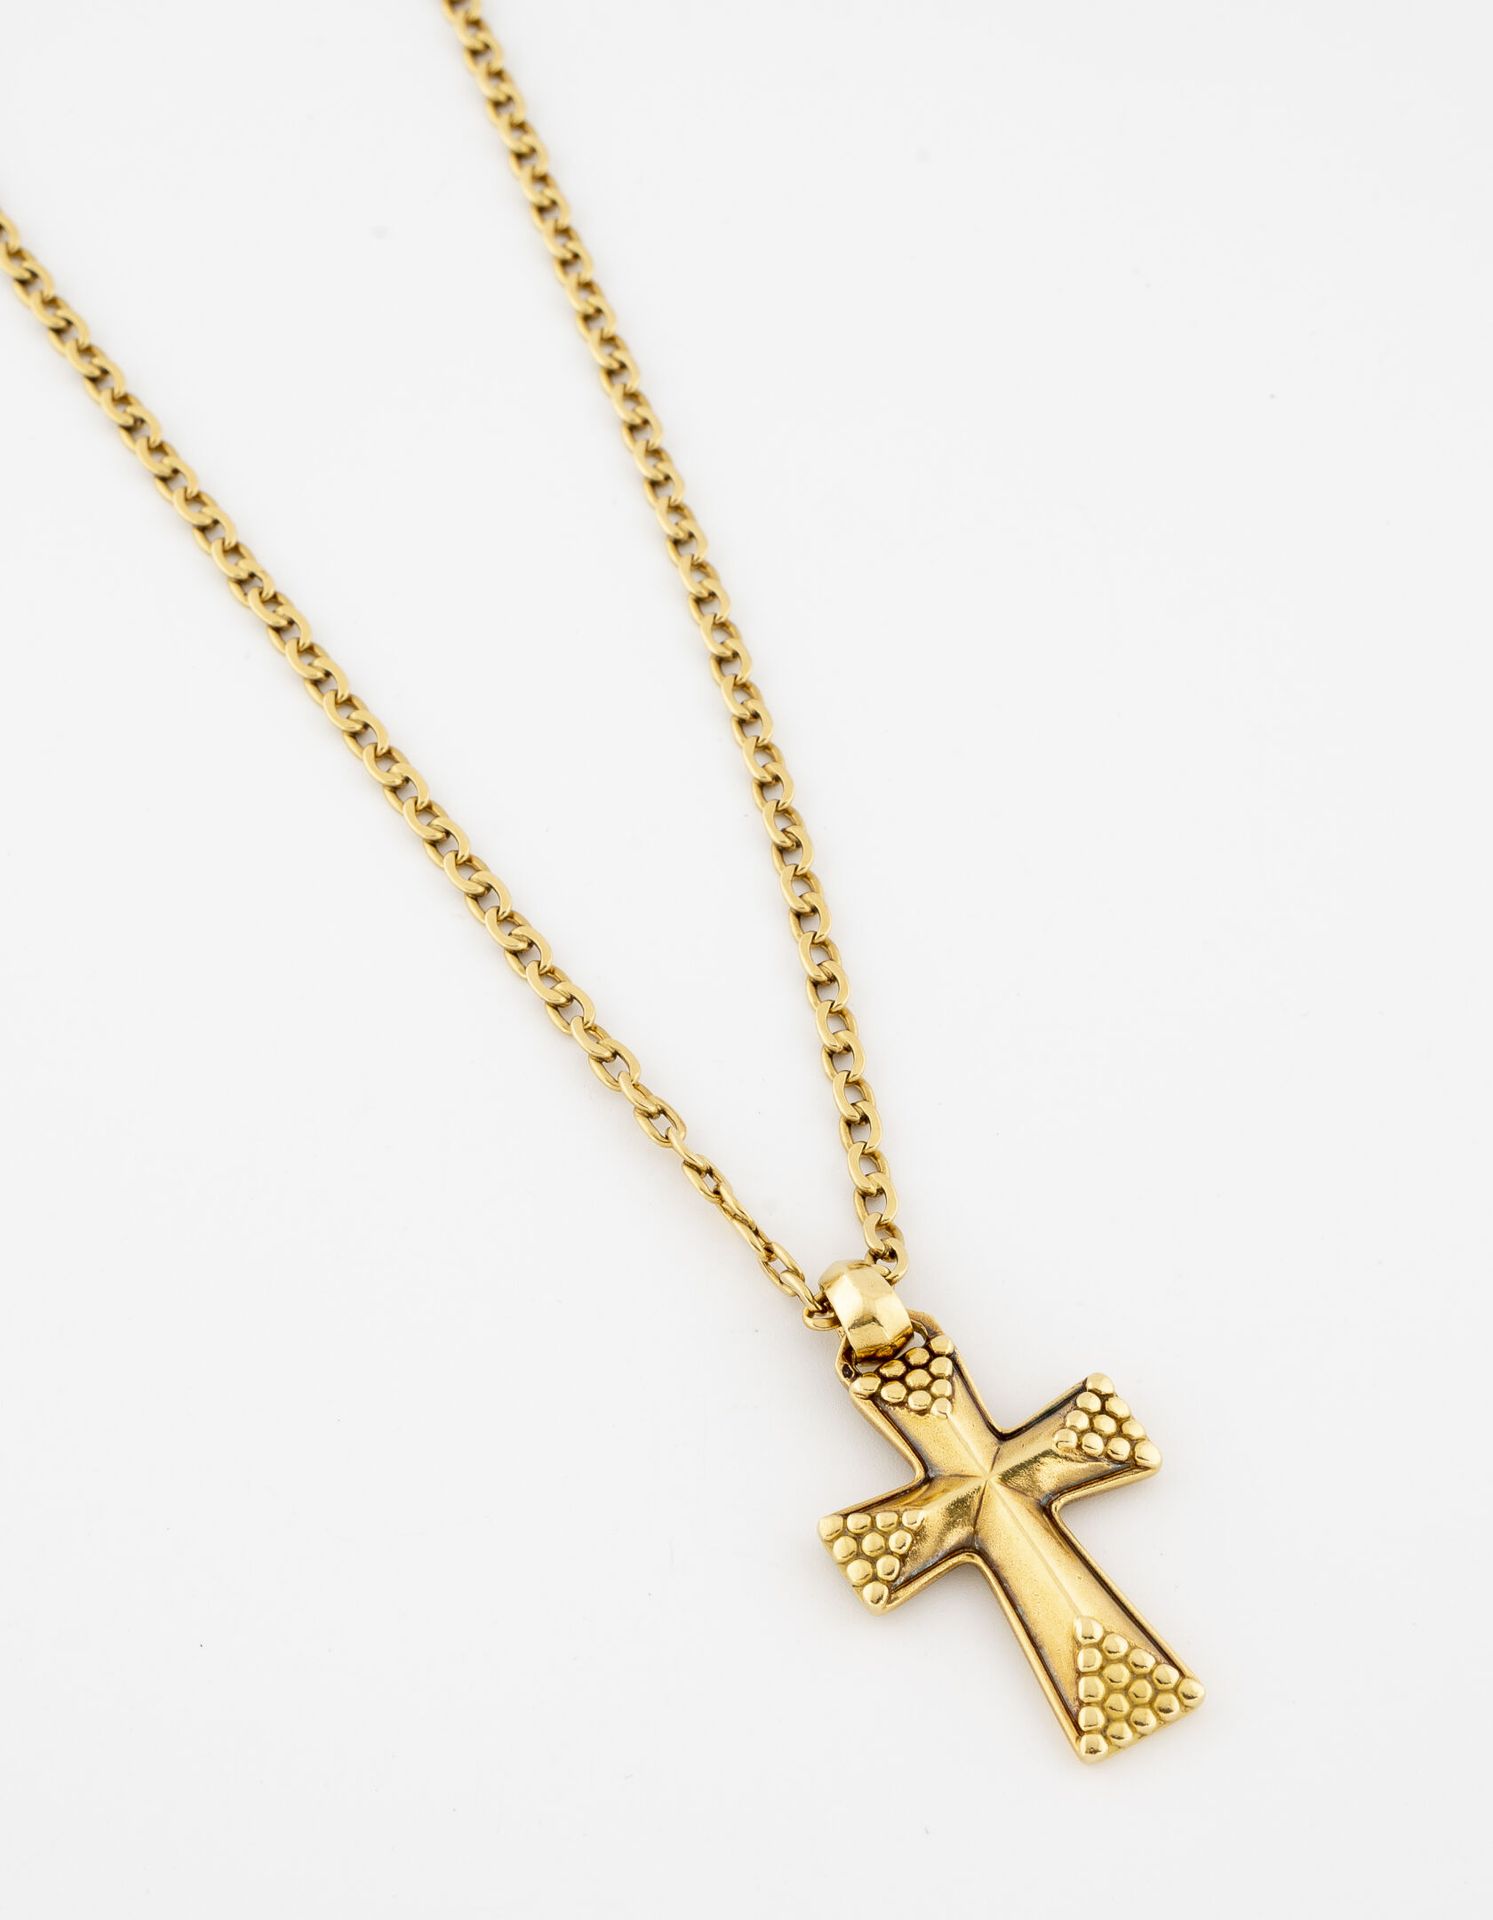 Null 黄金（750）豆形颈链，黄金（750）十字架吊坠。

总重量：35.4克。 - 链条长度：68厘米。